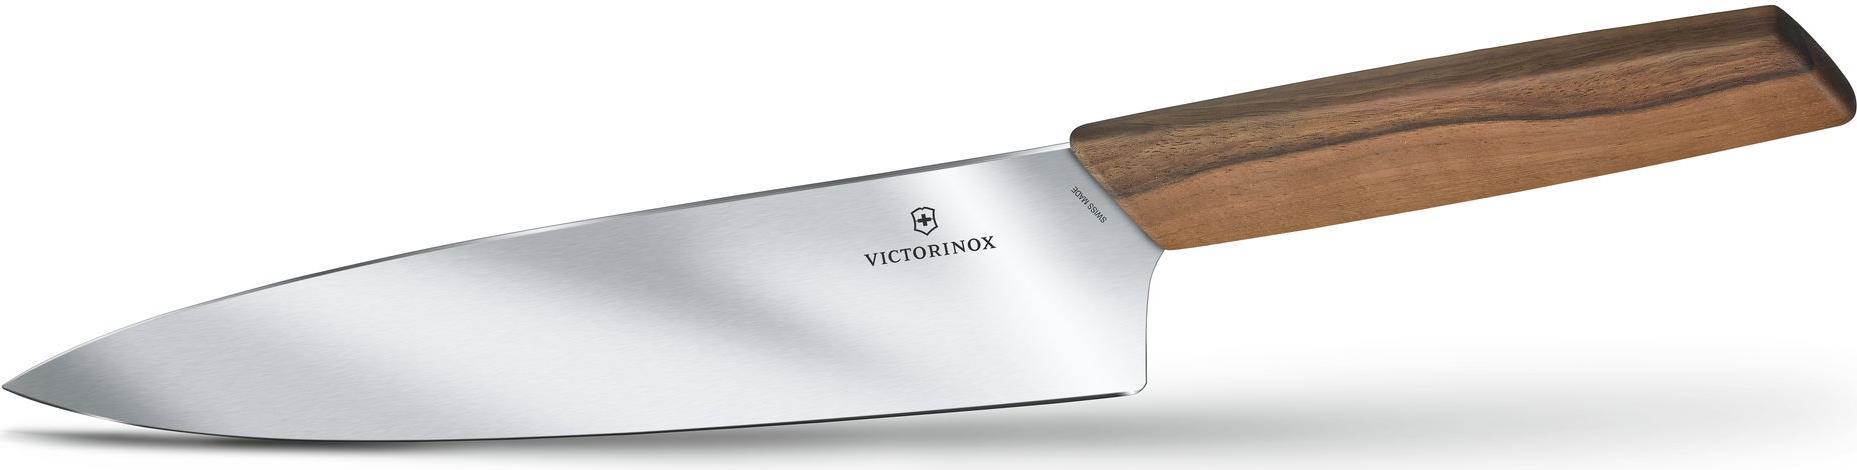 Victorinox 6.9010.20G Küchenmesser Edelstahl 1 Stück(e) Tranchiermesser (V-6.90 10.20G)